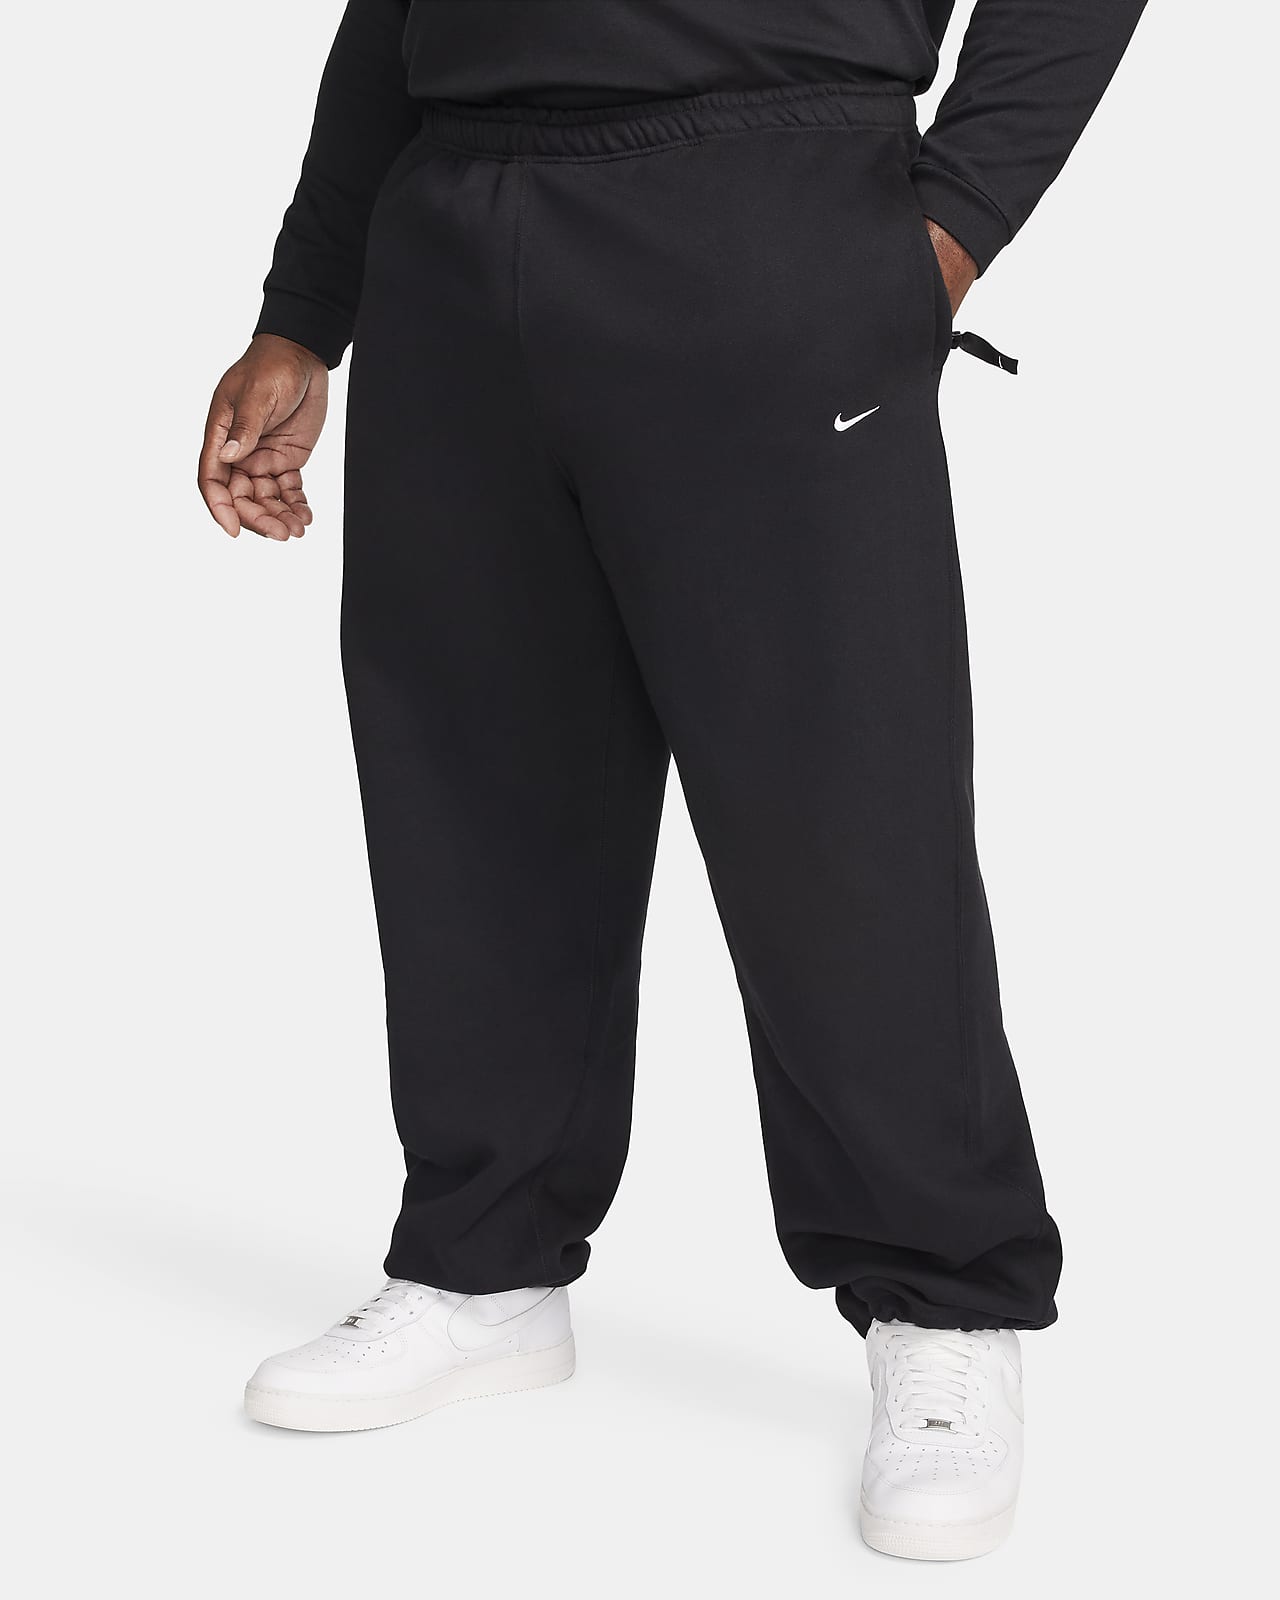 Black Solo Swoosh Lounge Pants by Nike on Sale